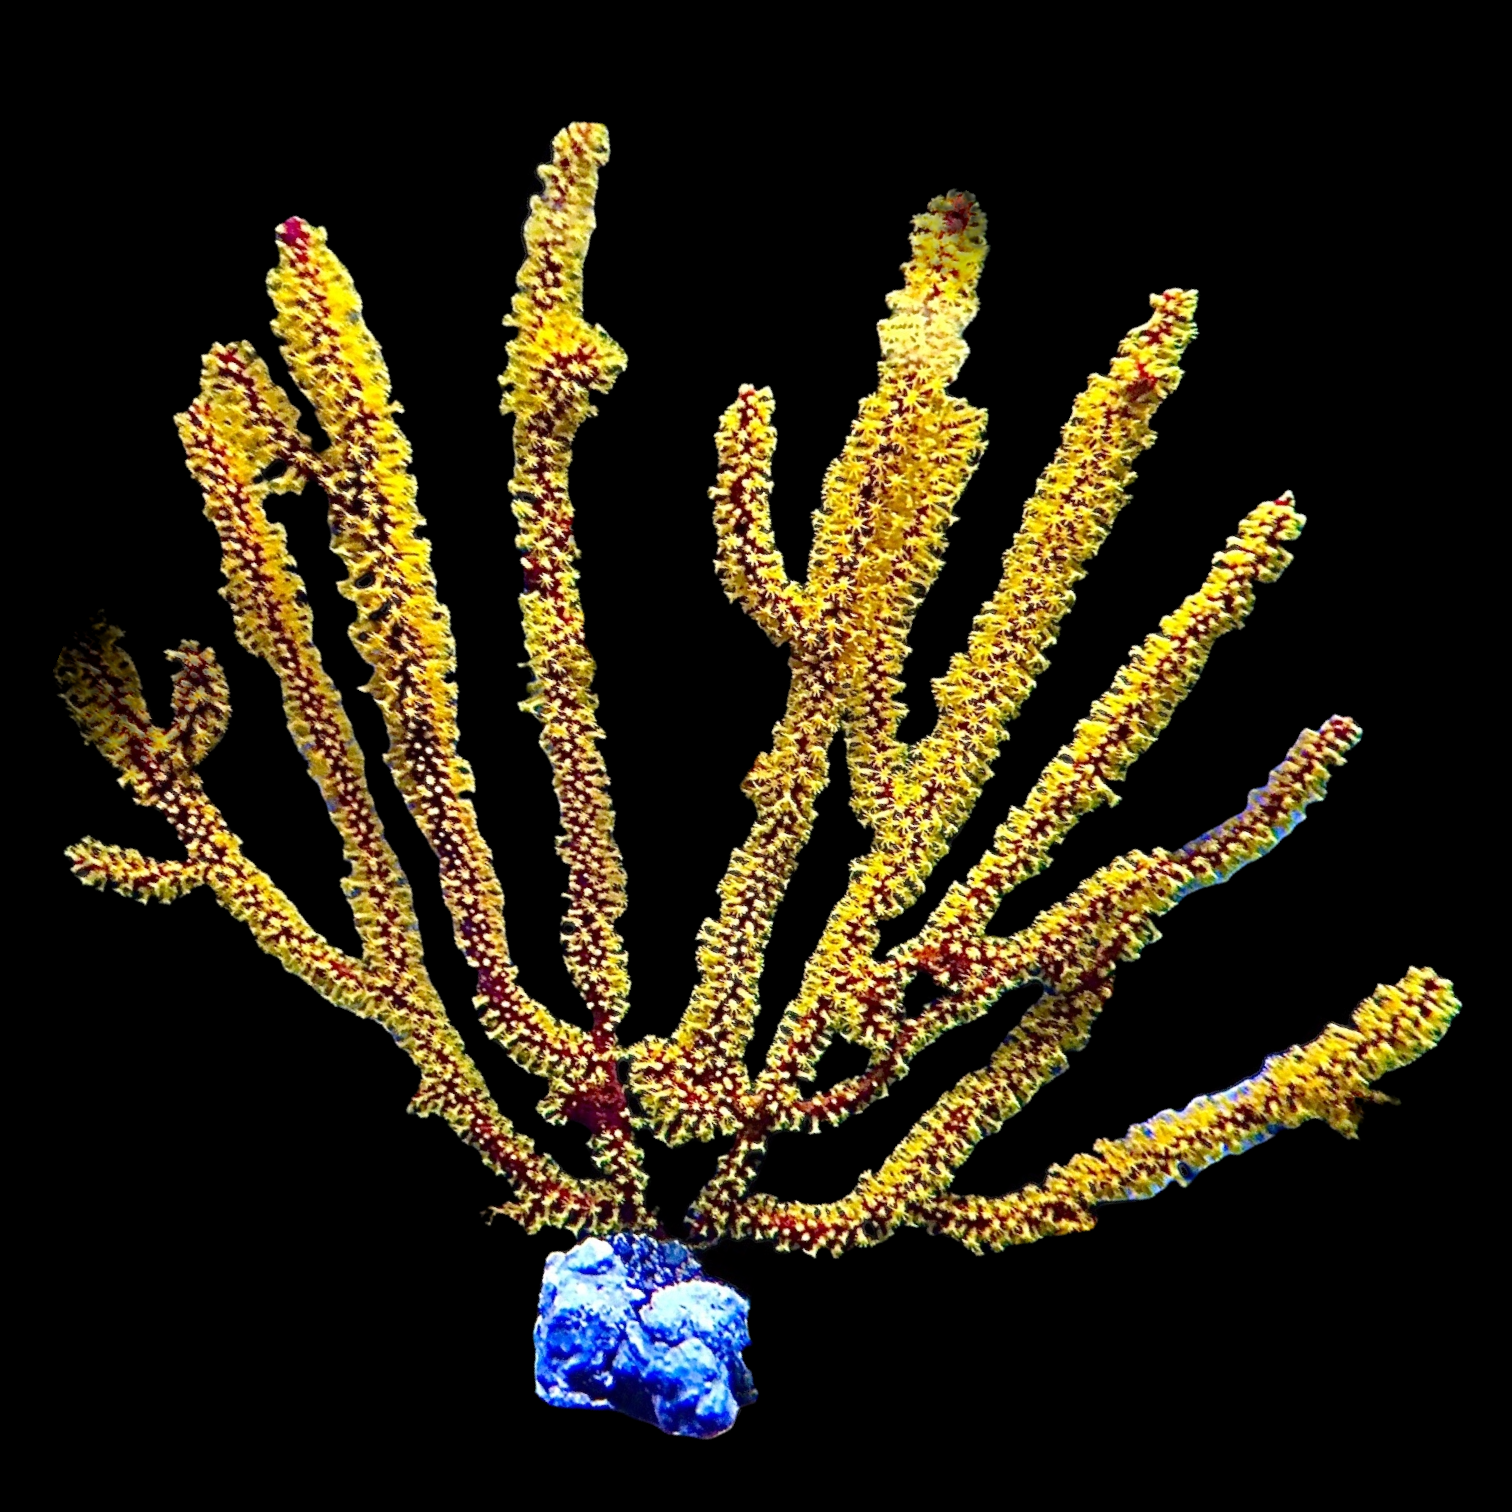 Australian Golden Polyp Gorgonian